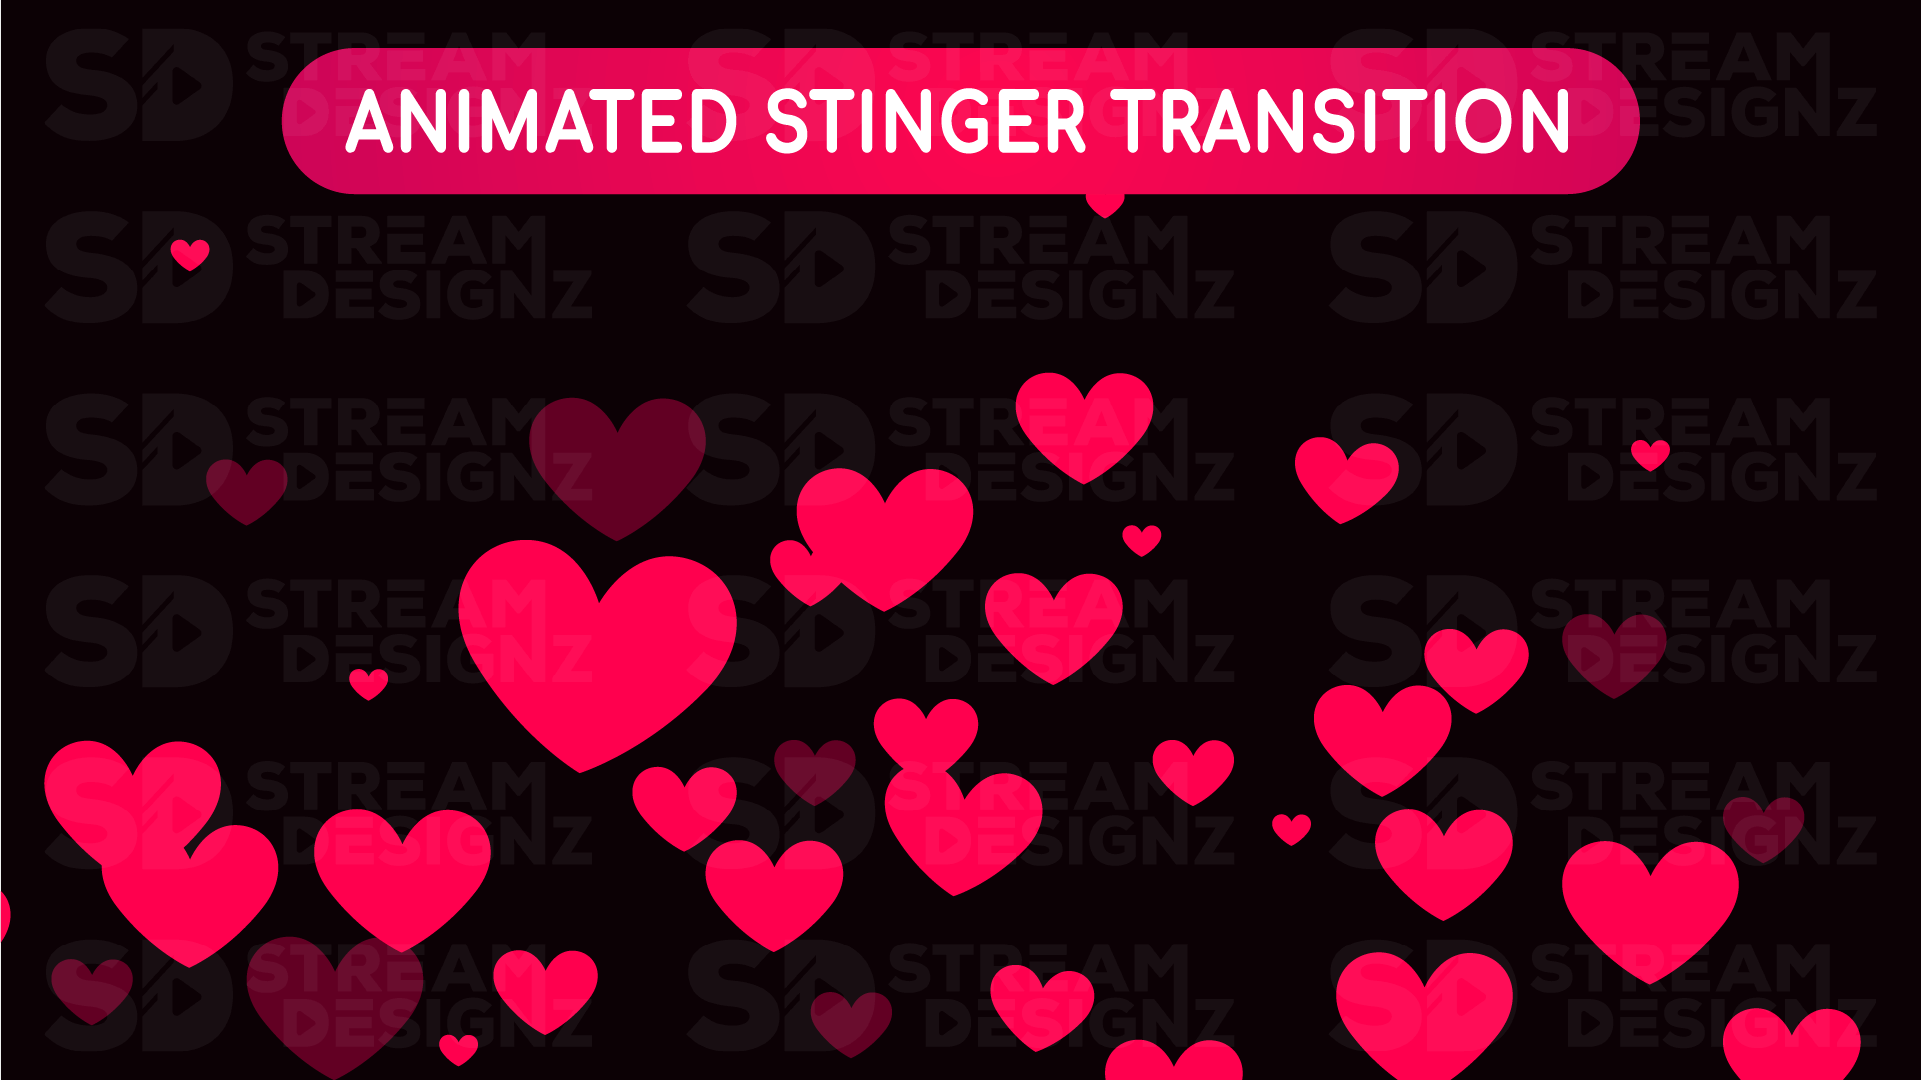 Ultimate stream package stinger transition valentine lofi stream designz